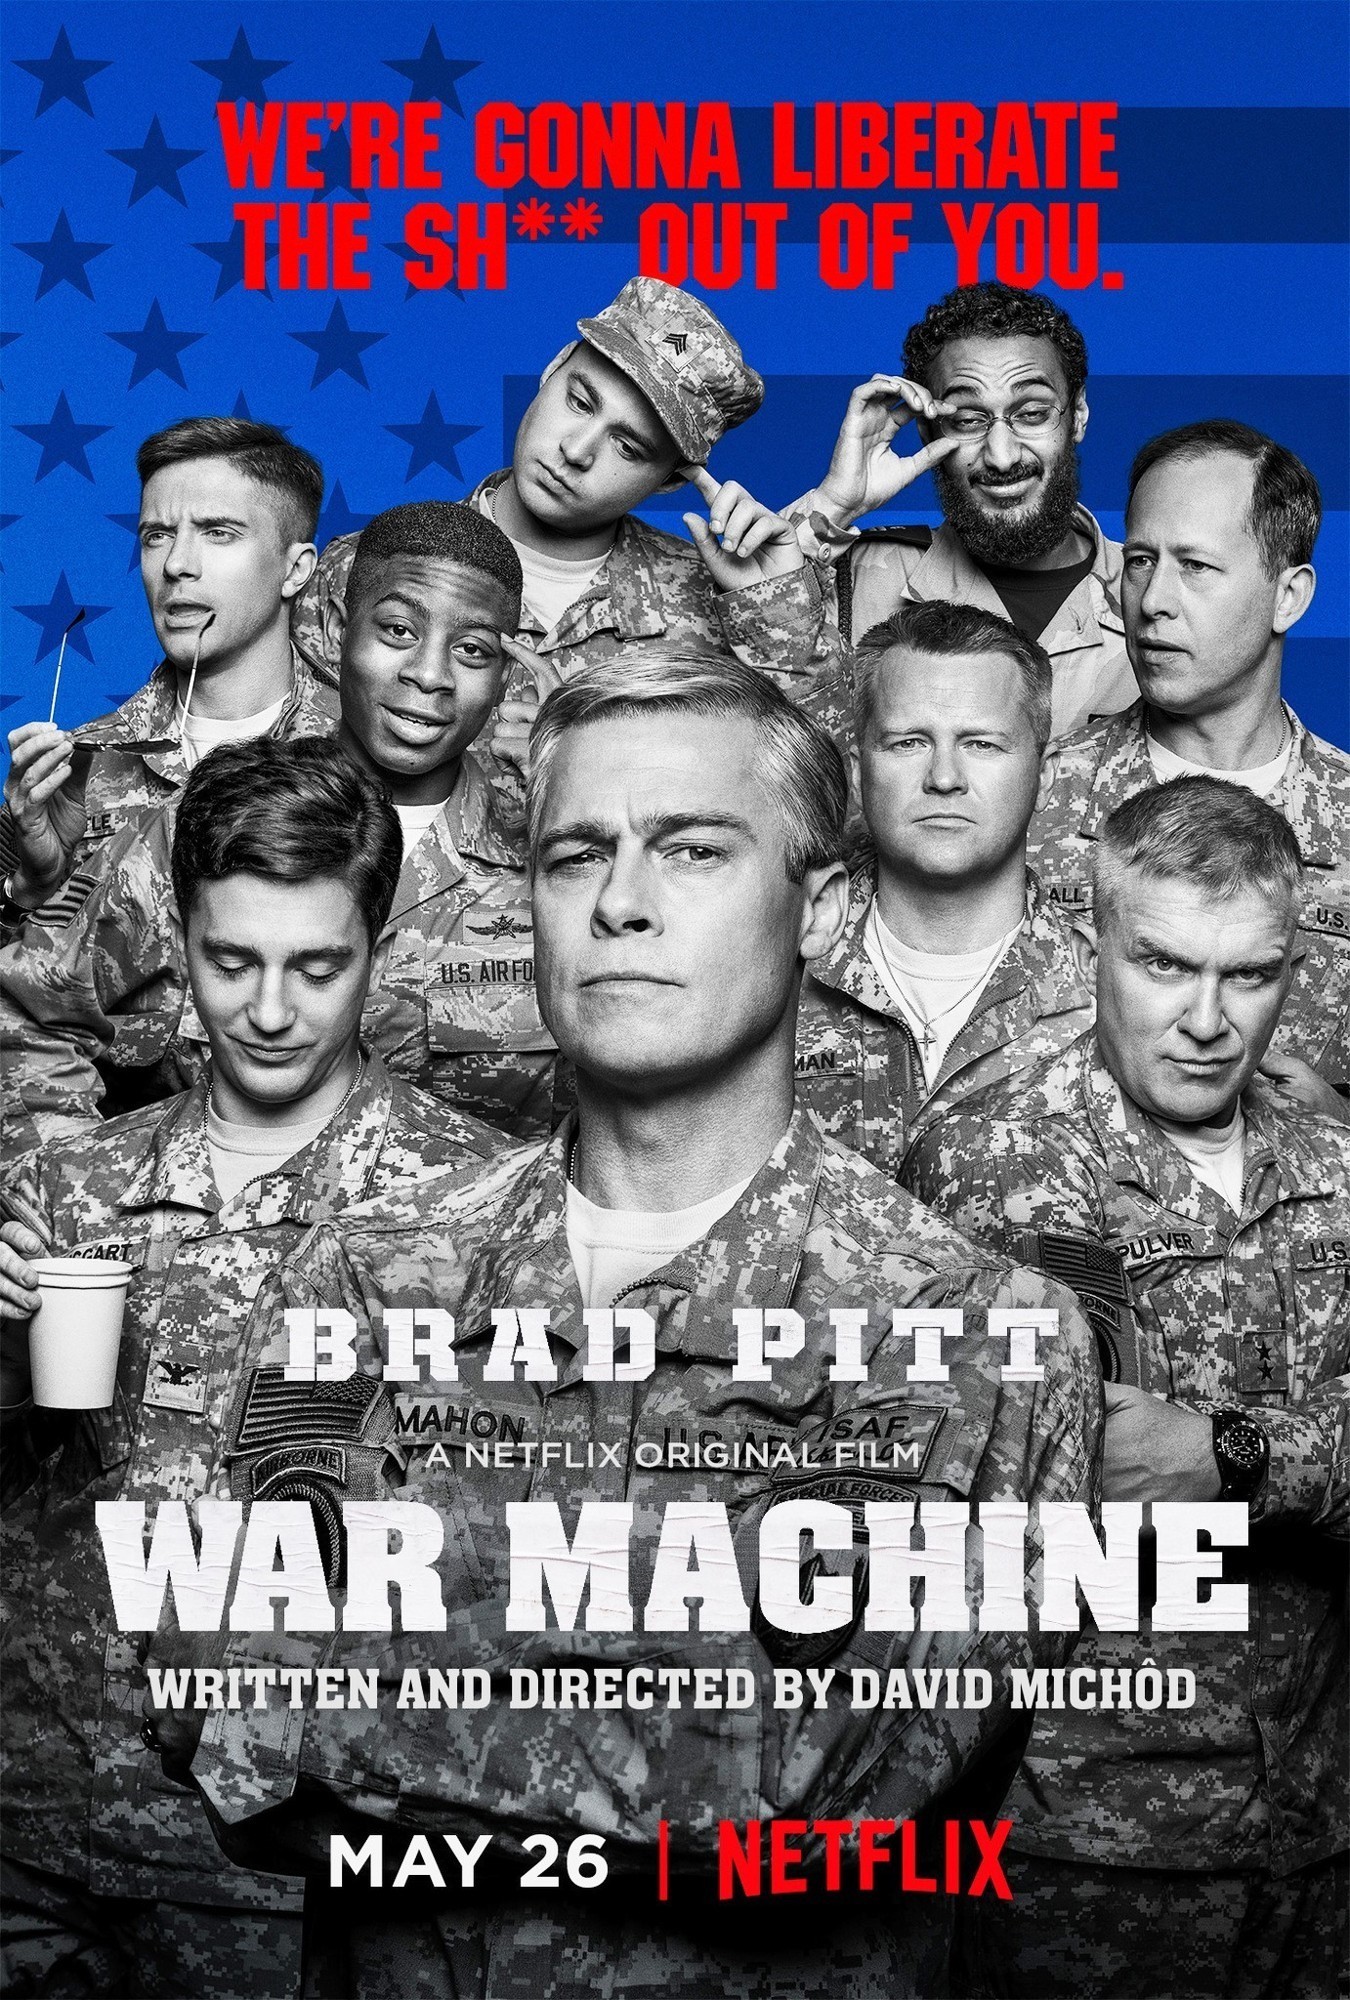 Poster of Netflix's War Machine (2017)